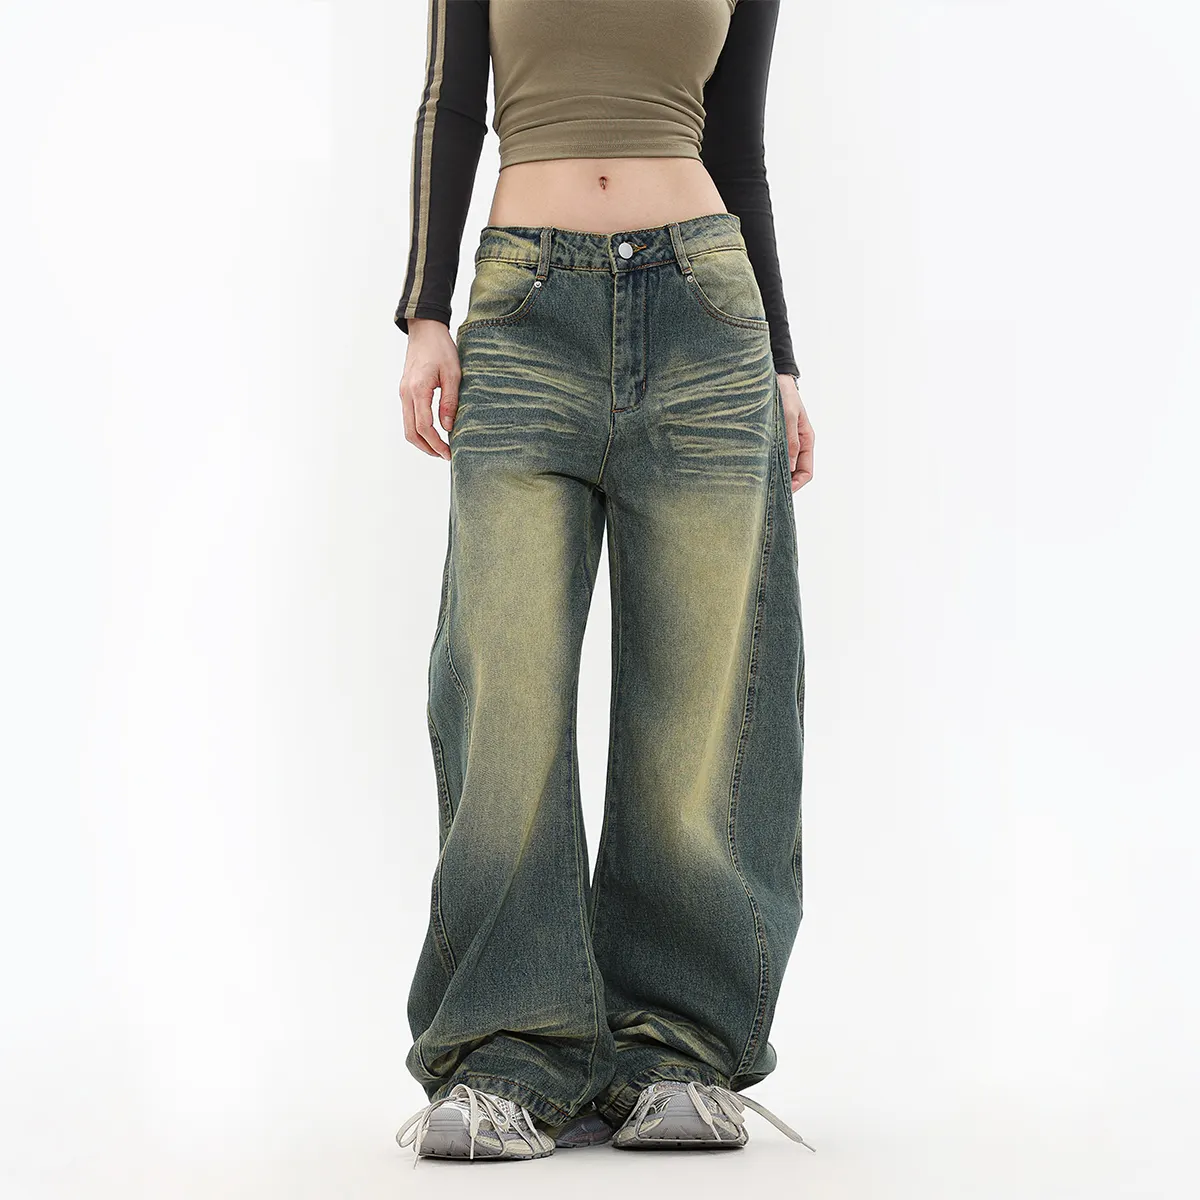 Bell Bottom Jeans for Women Bootcut Jeans Hot Sale Low Rise Denim Adult Woven Softener Full Length Women's Denim Pants Loose